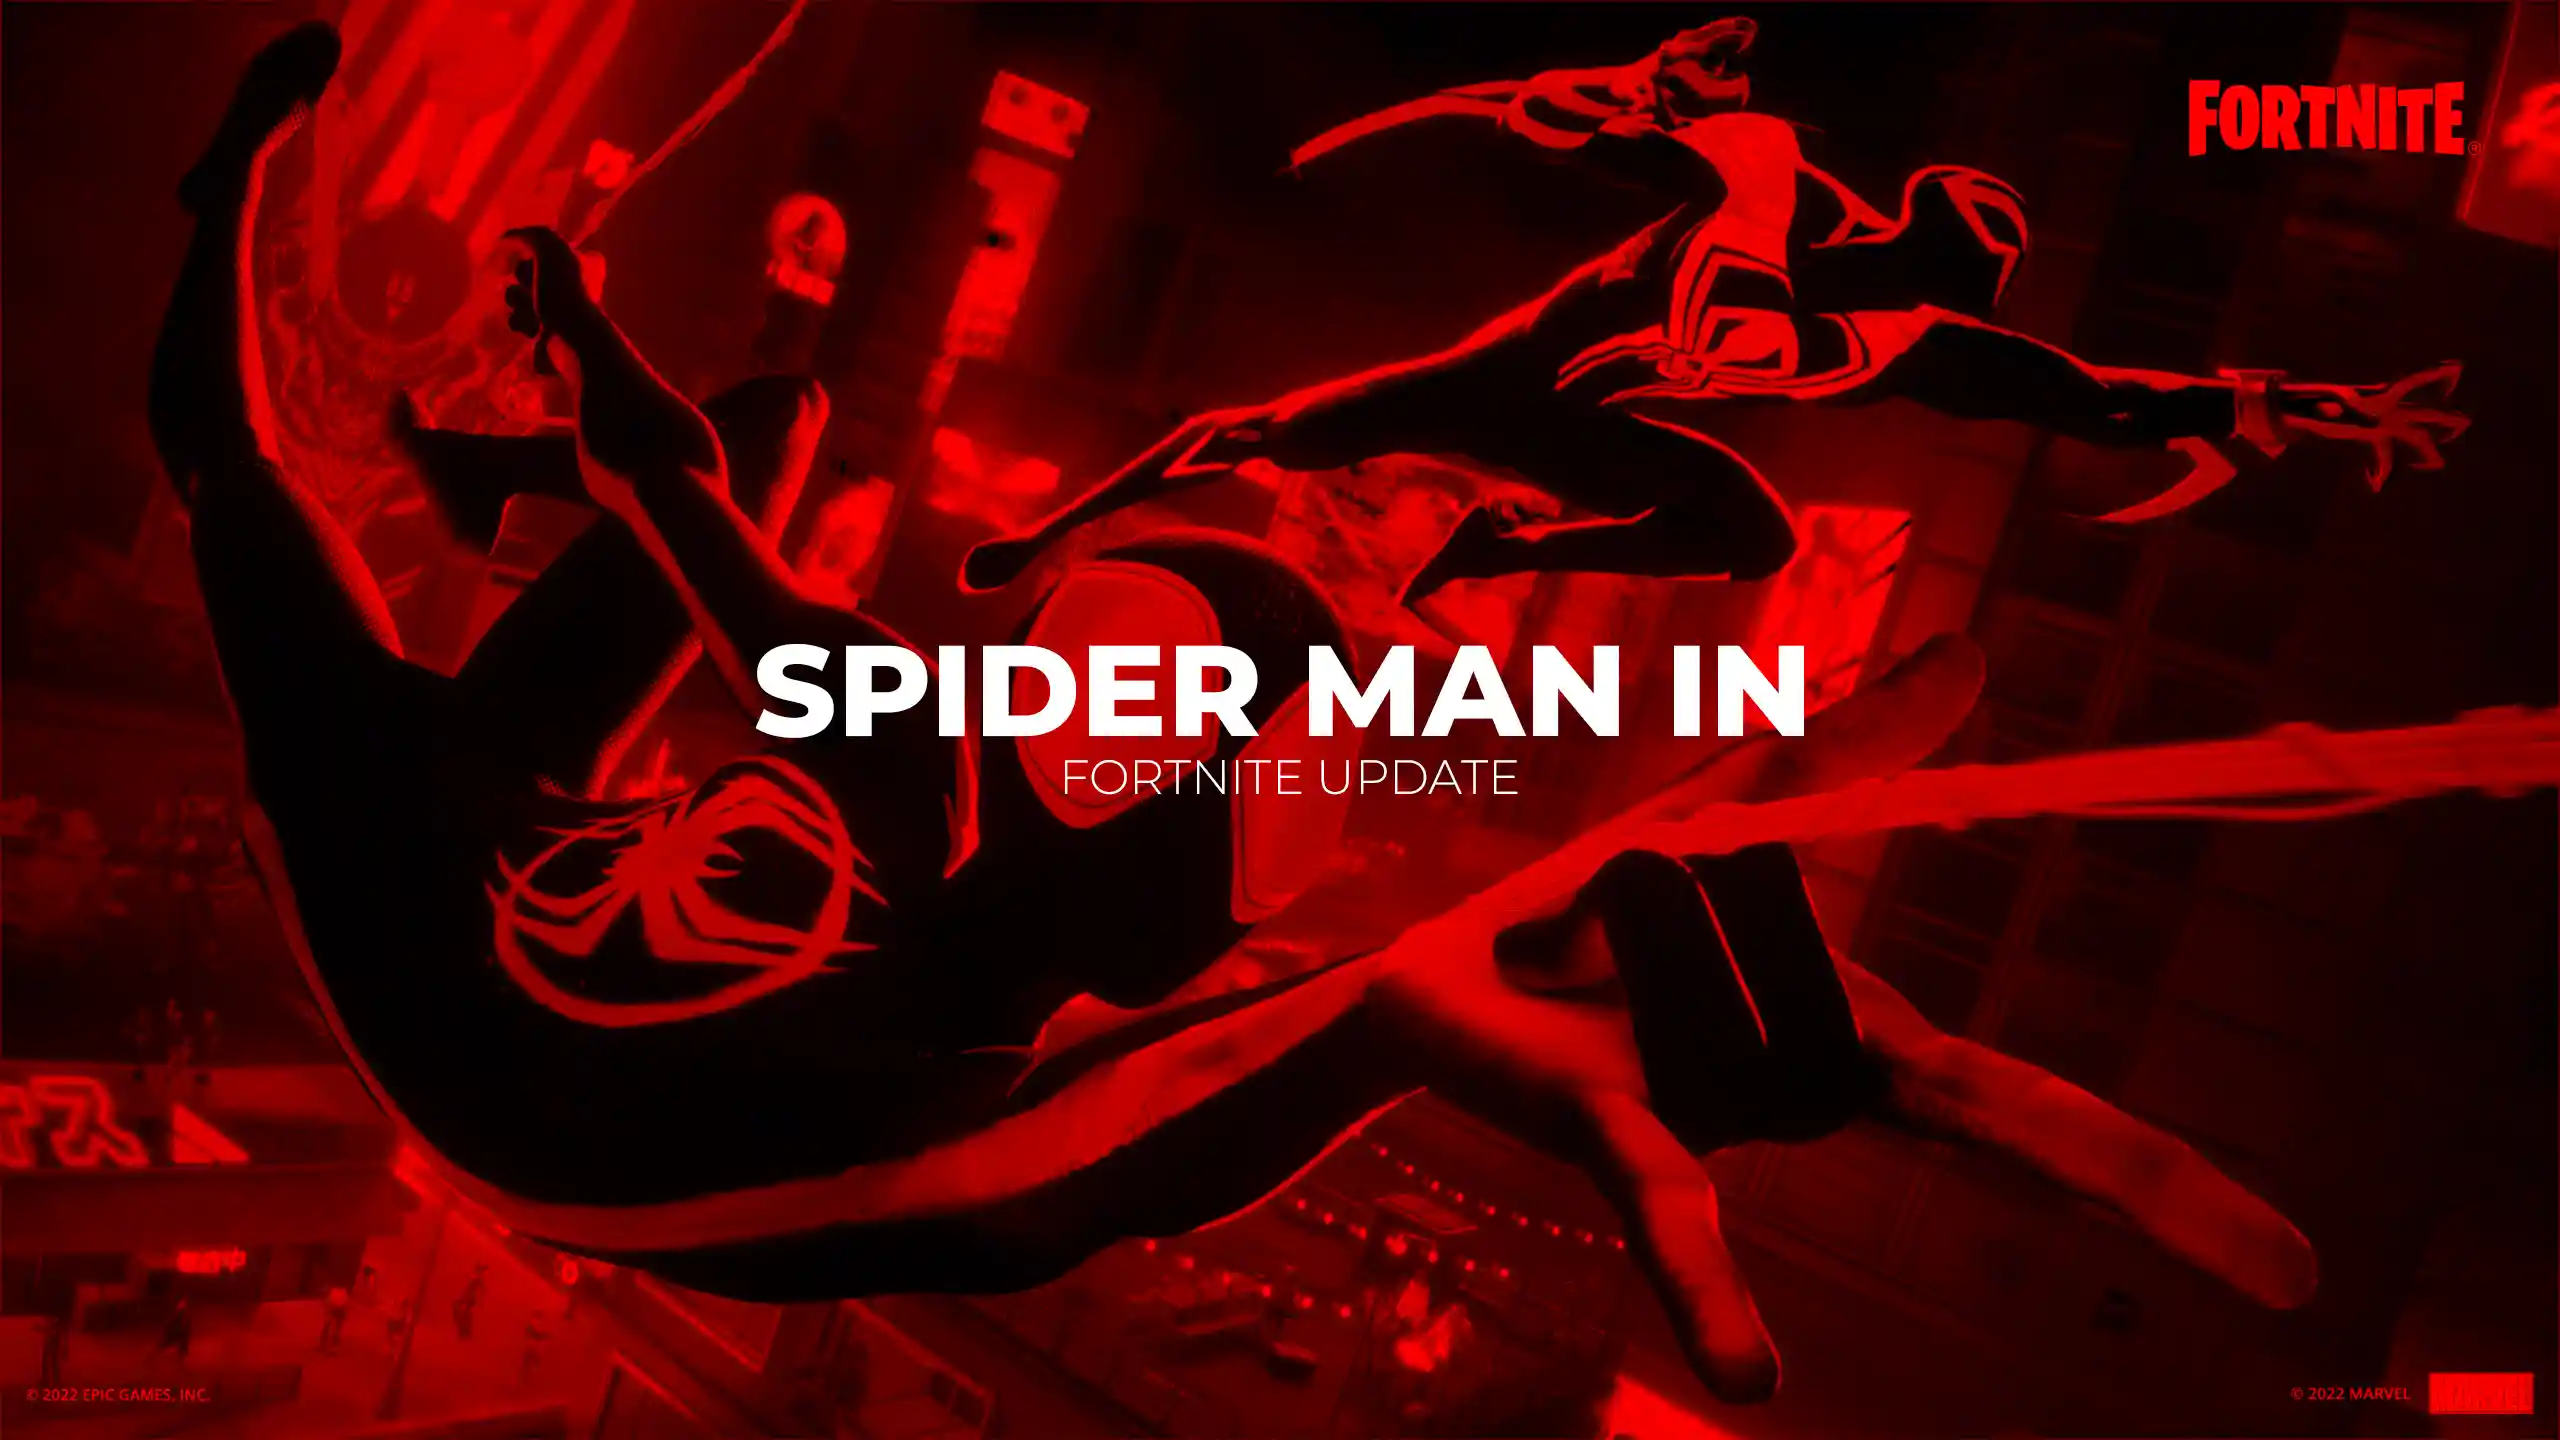 Spider Man in Fortnite Update